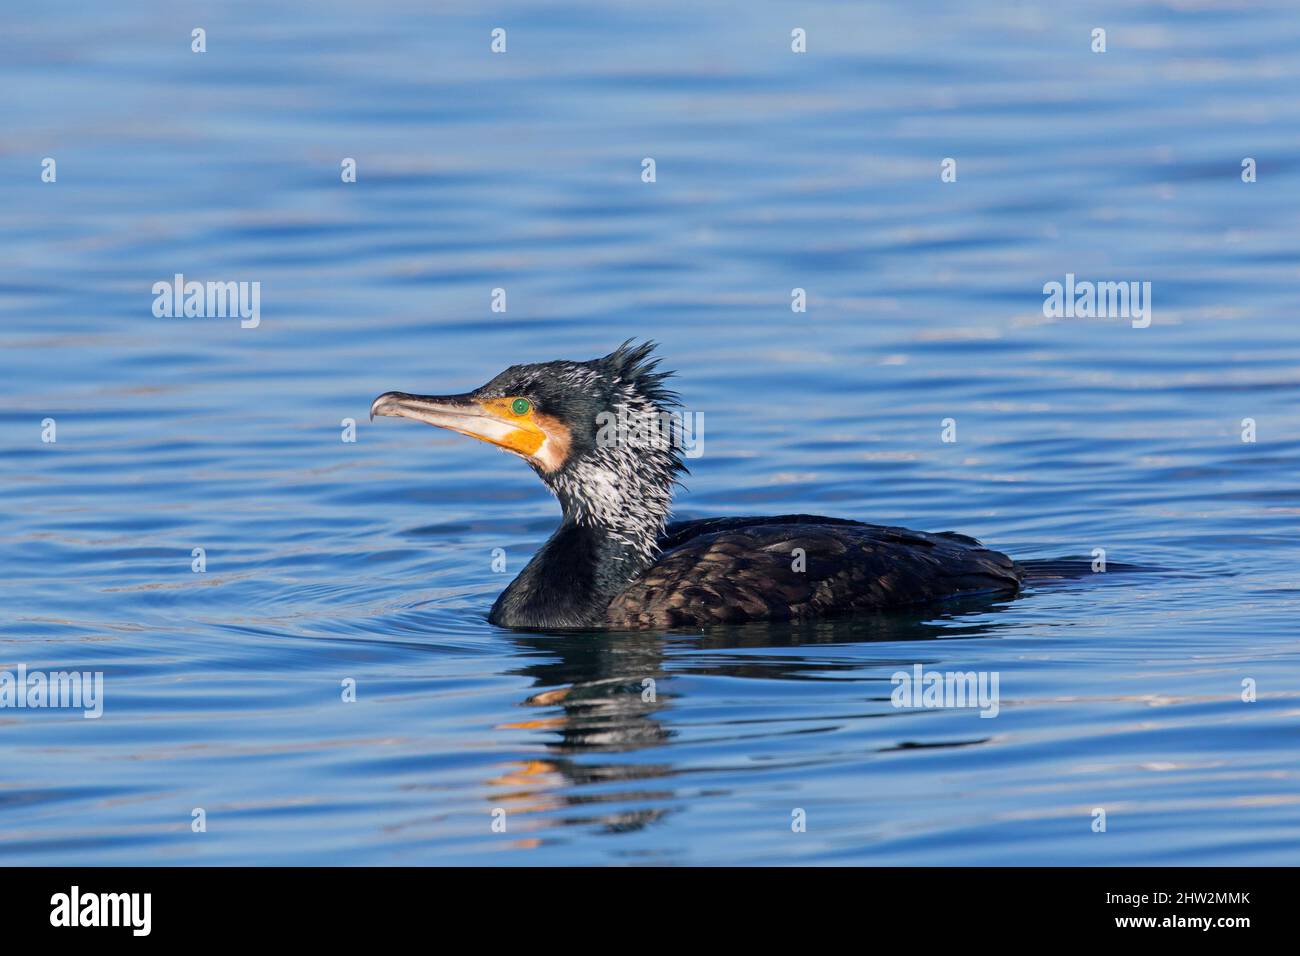 Grand cormoran (Phalacrocorax carbo) dans les plumage reproductif nageant dans l'eau de mer à la fin de l'hiver Banque D'Images